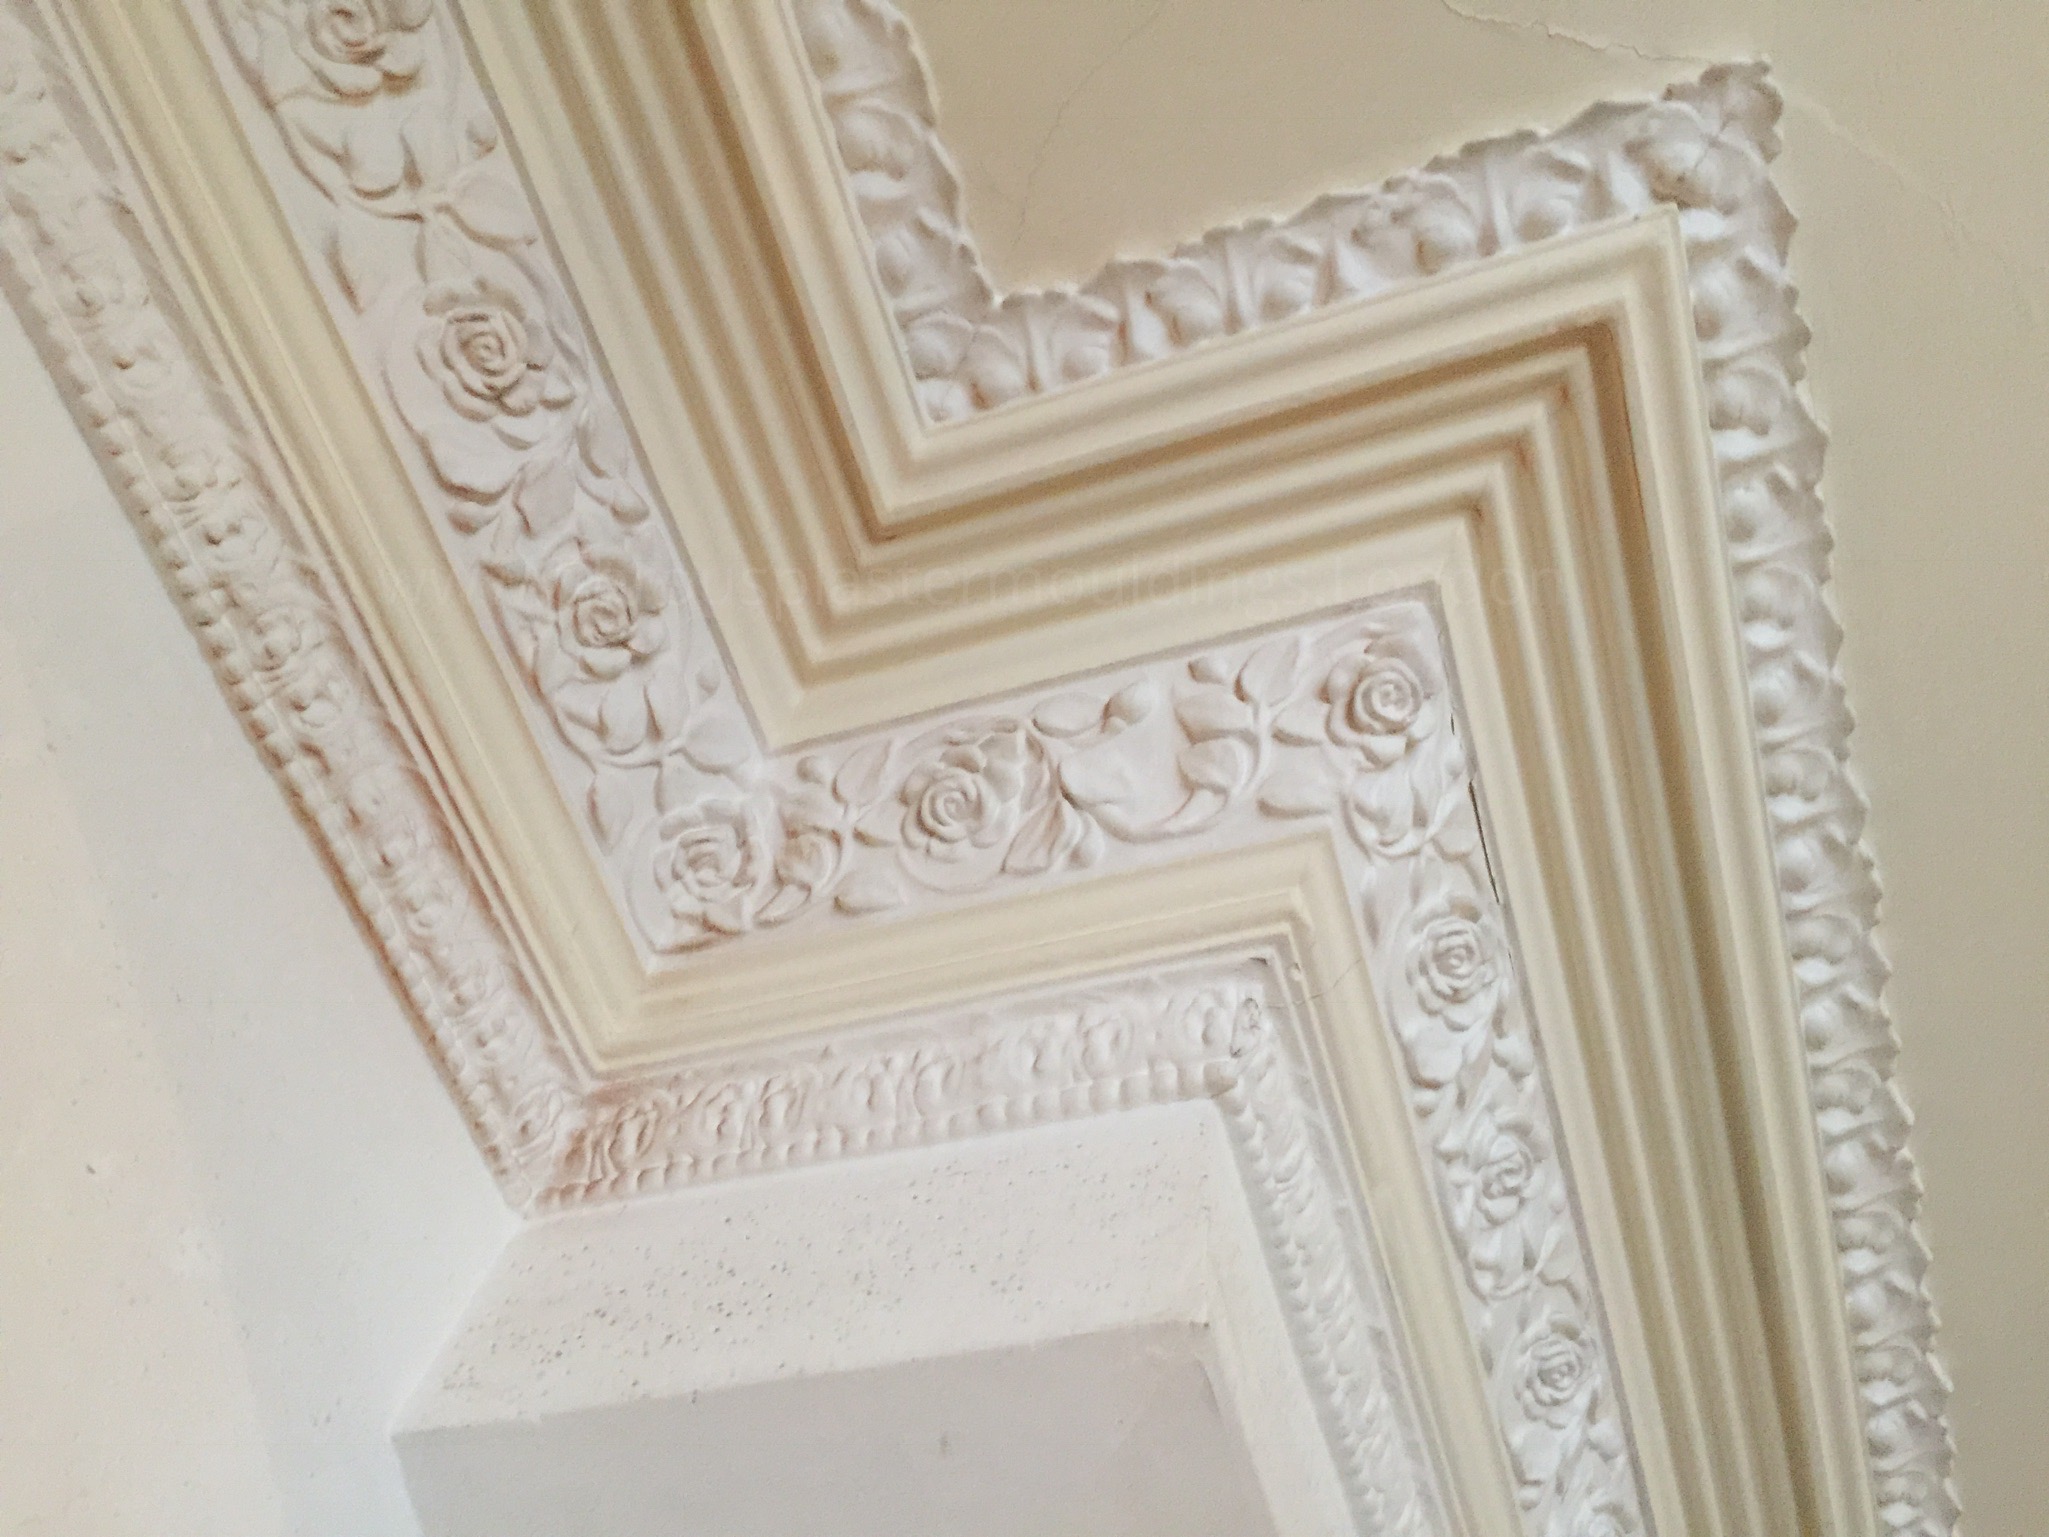 plaster cornice restoration - Cornice repairs in London by professionals